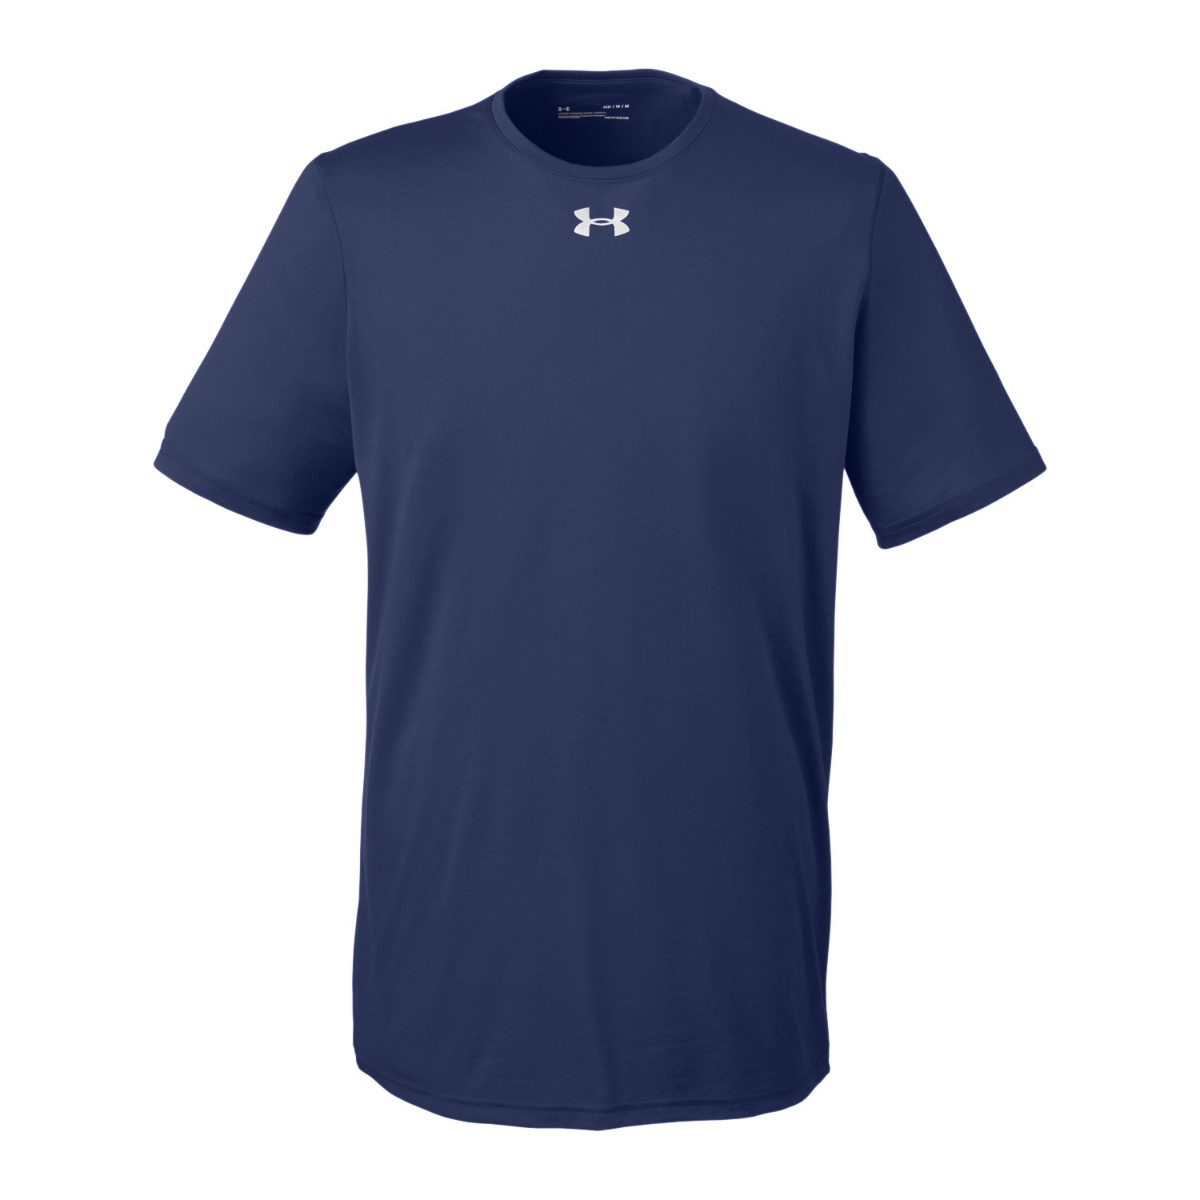 UNDER ARMOUR® Men's Locker T-Shirt 2.0 #1305775 Navy